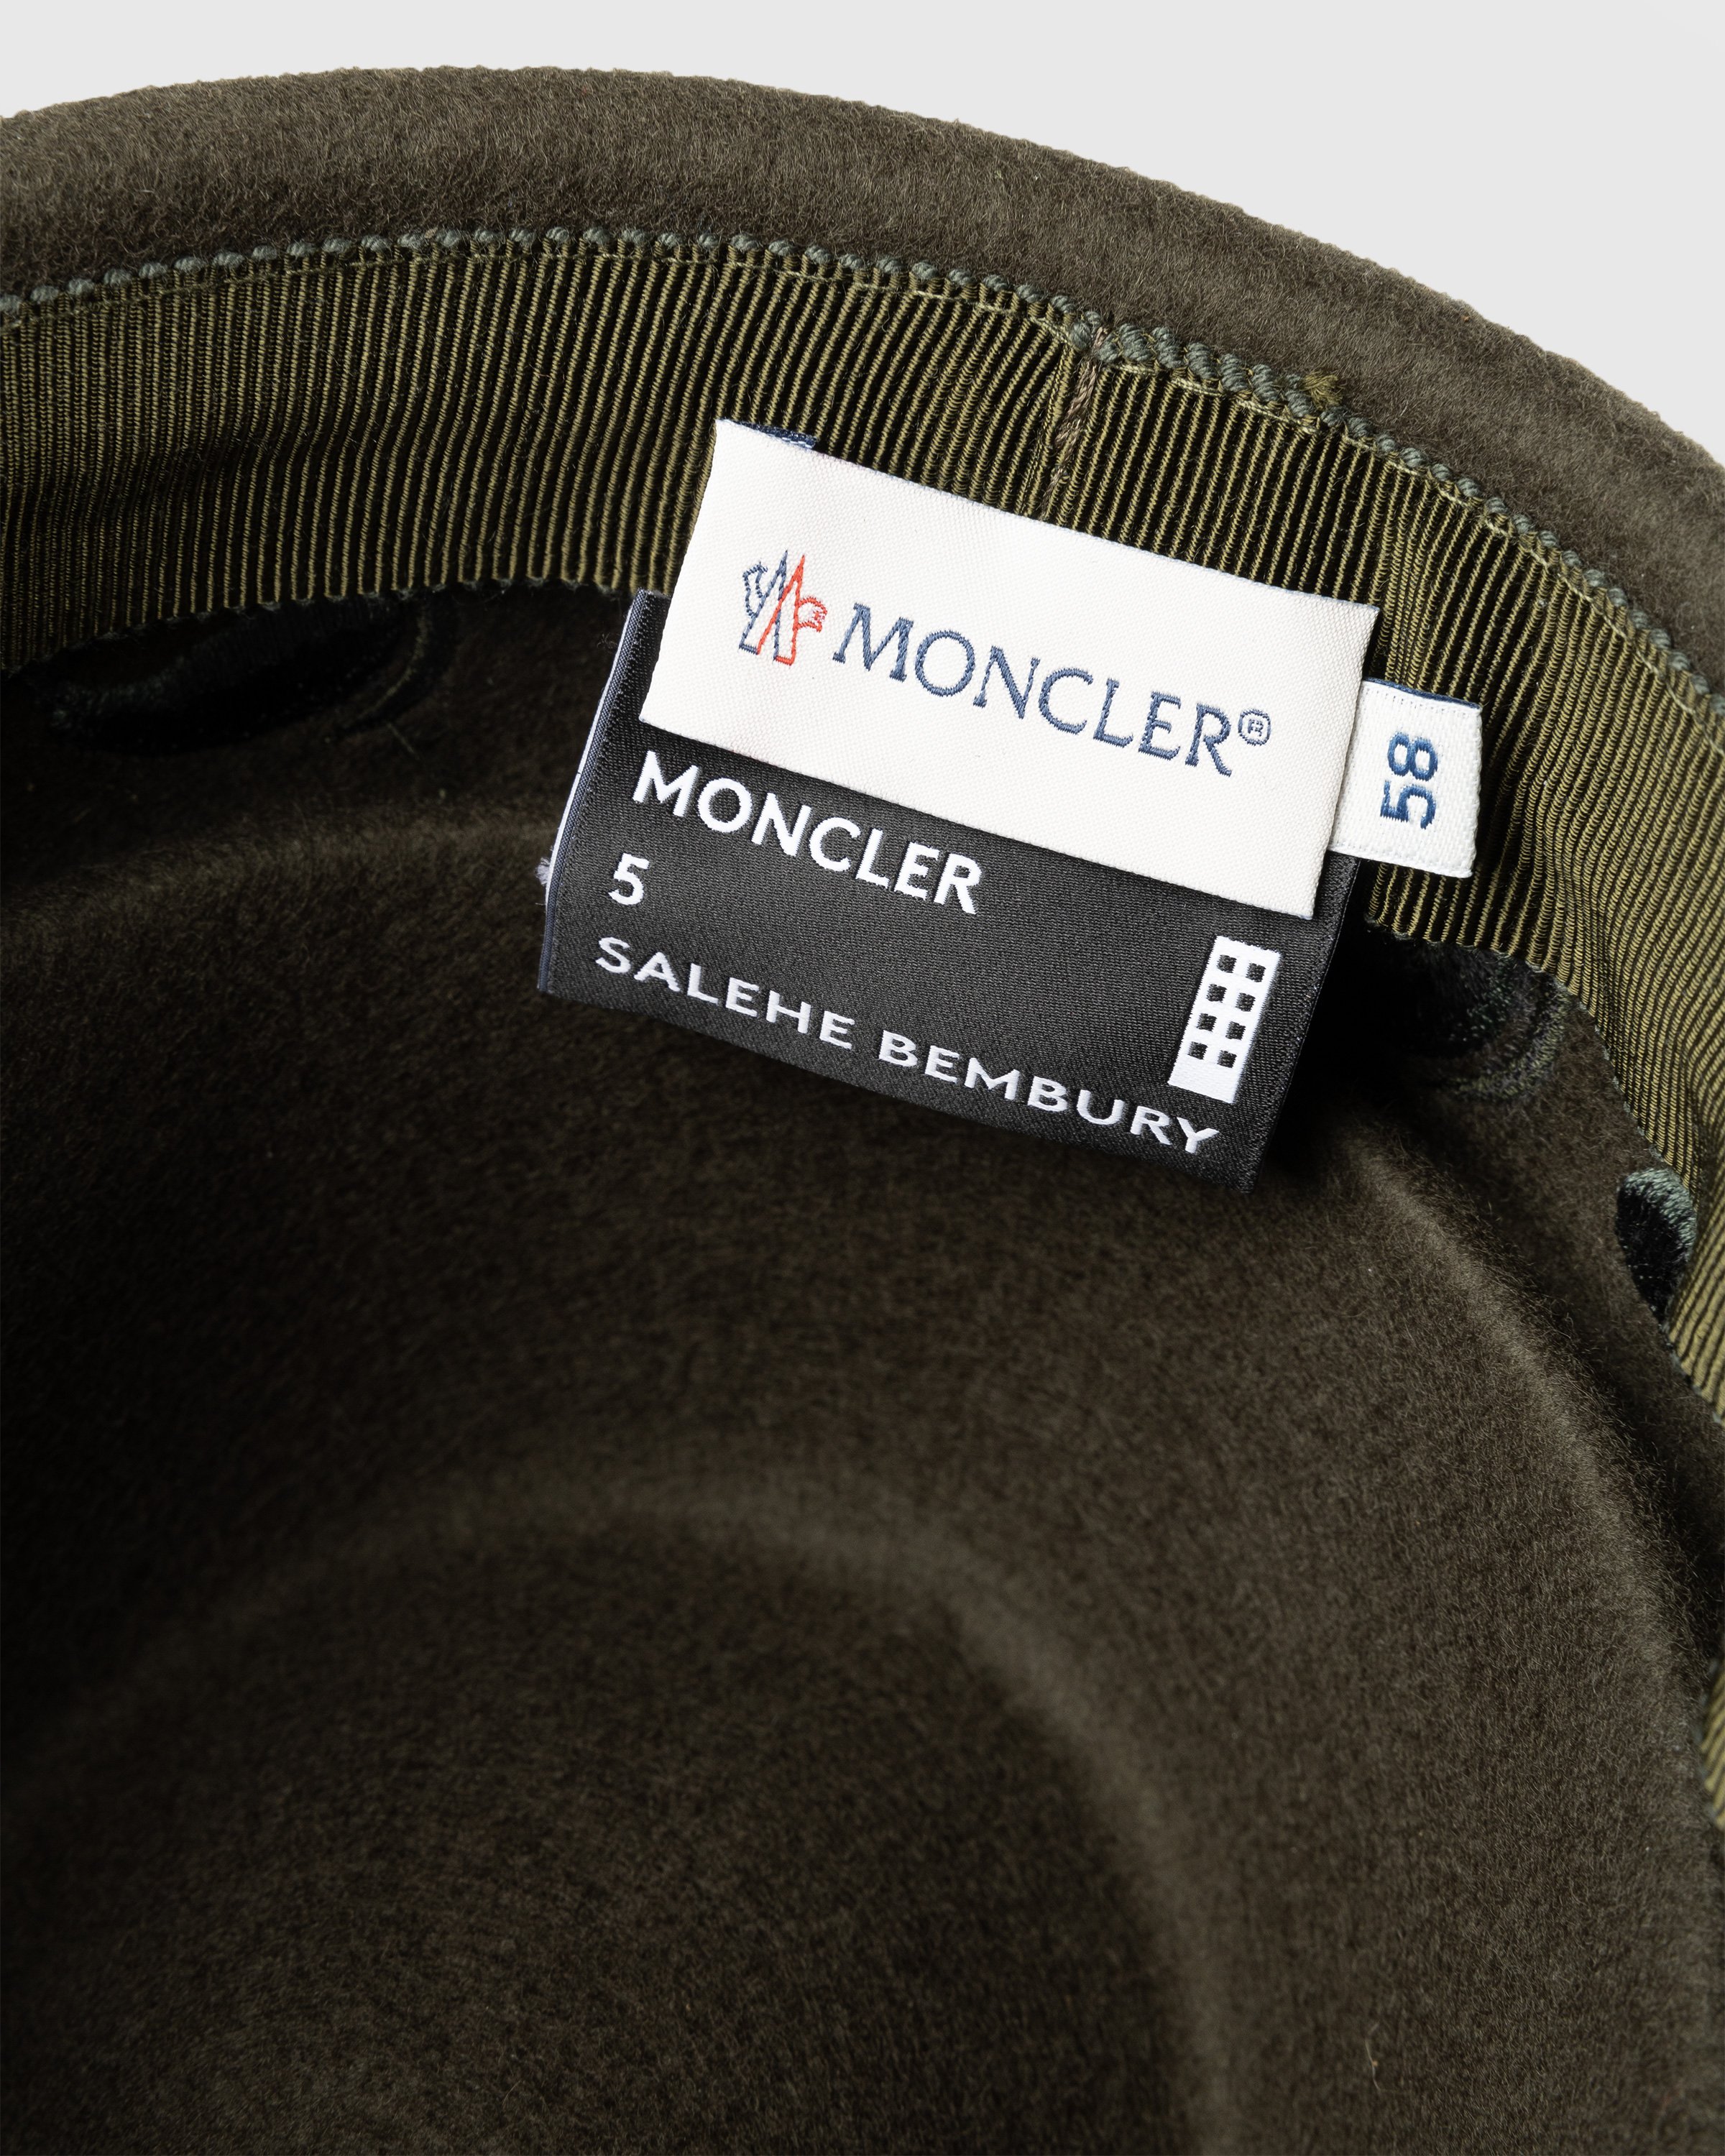 Moncler x Salehe Bembury - Wool Felt Beanie Green - Accessories - Green - Image 6